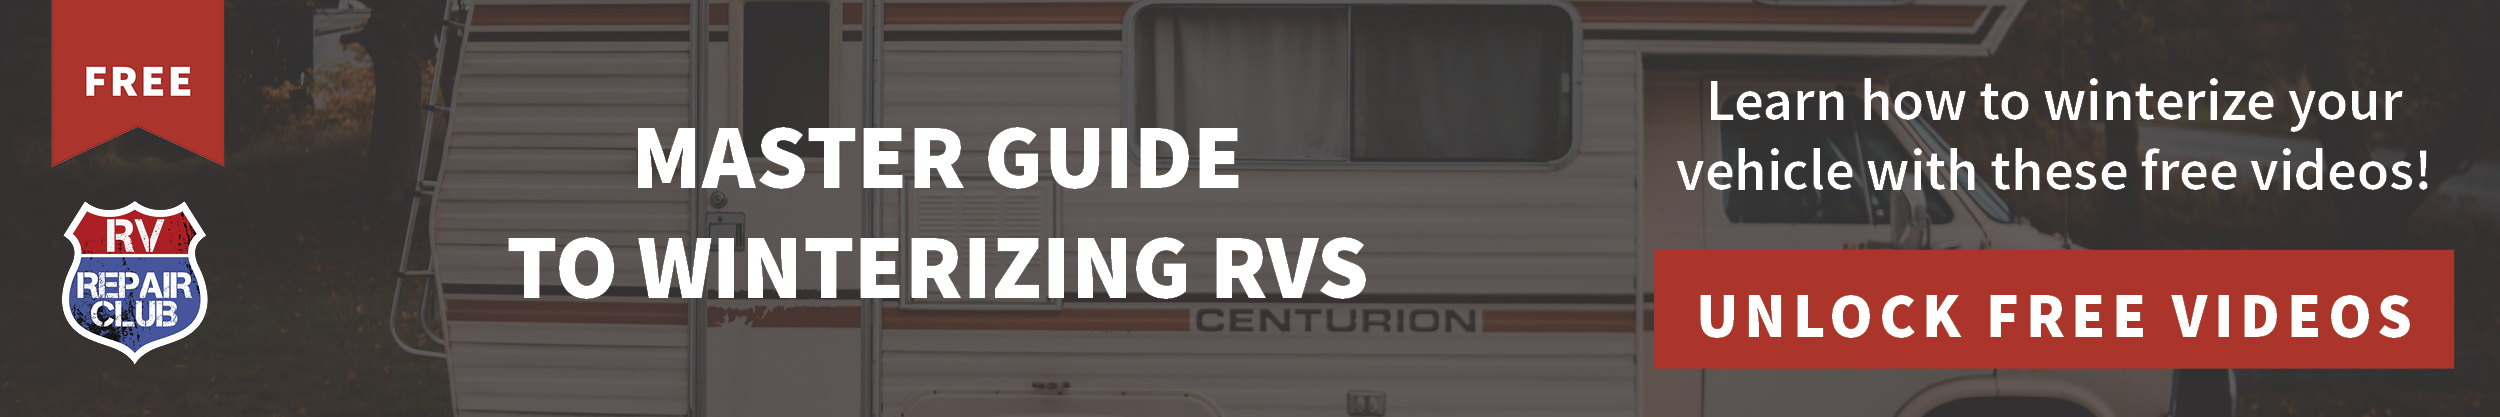 Master Guide to Winterizing RVs